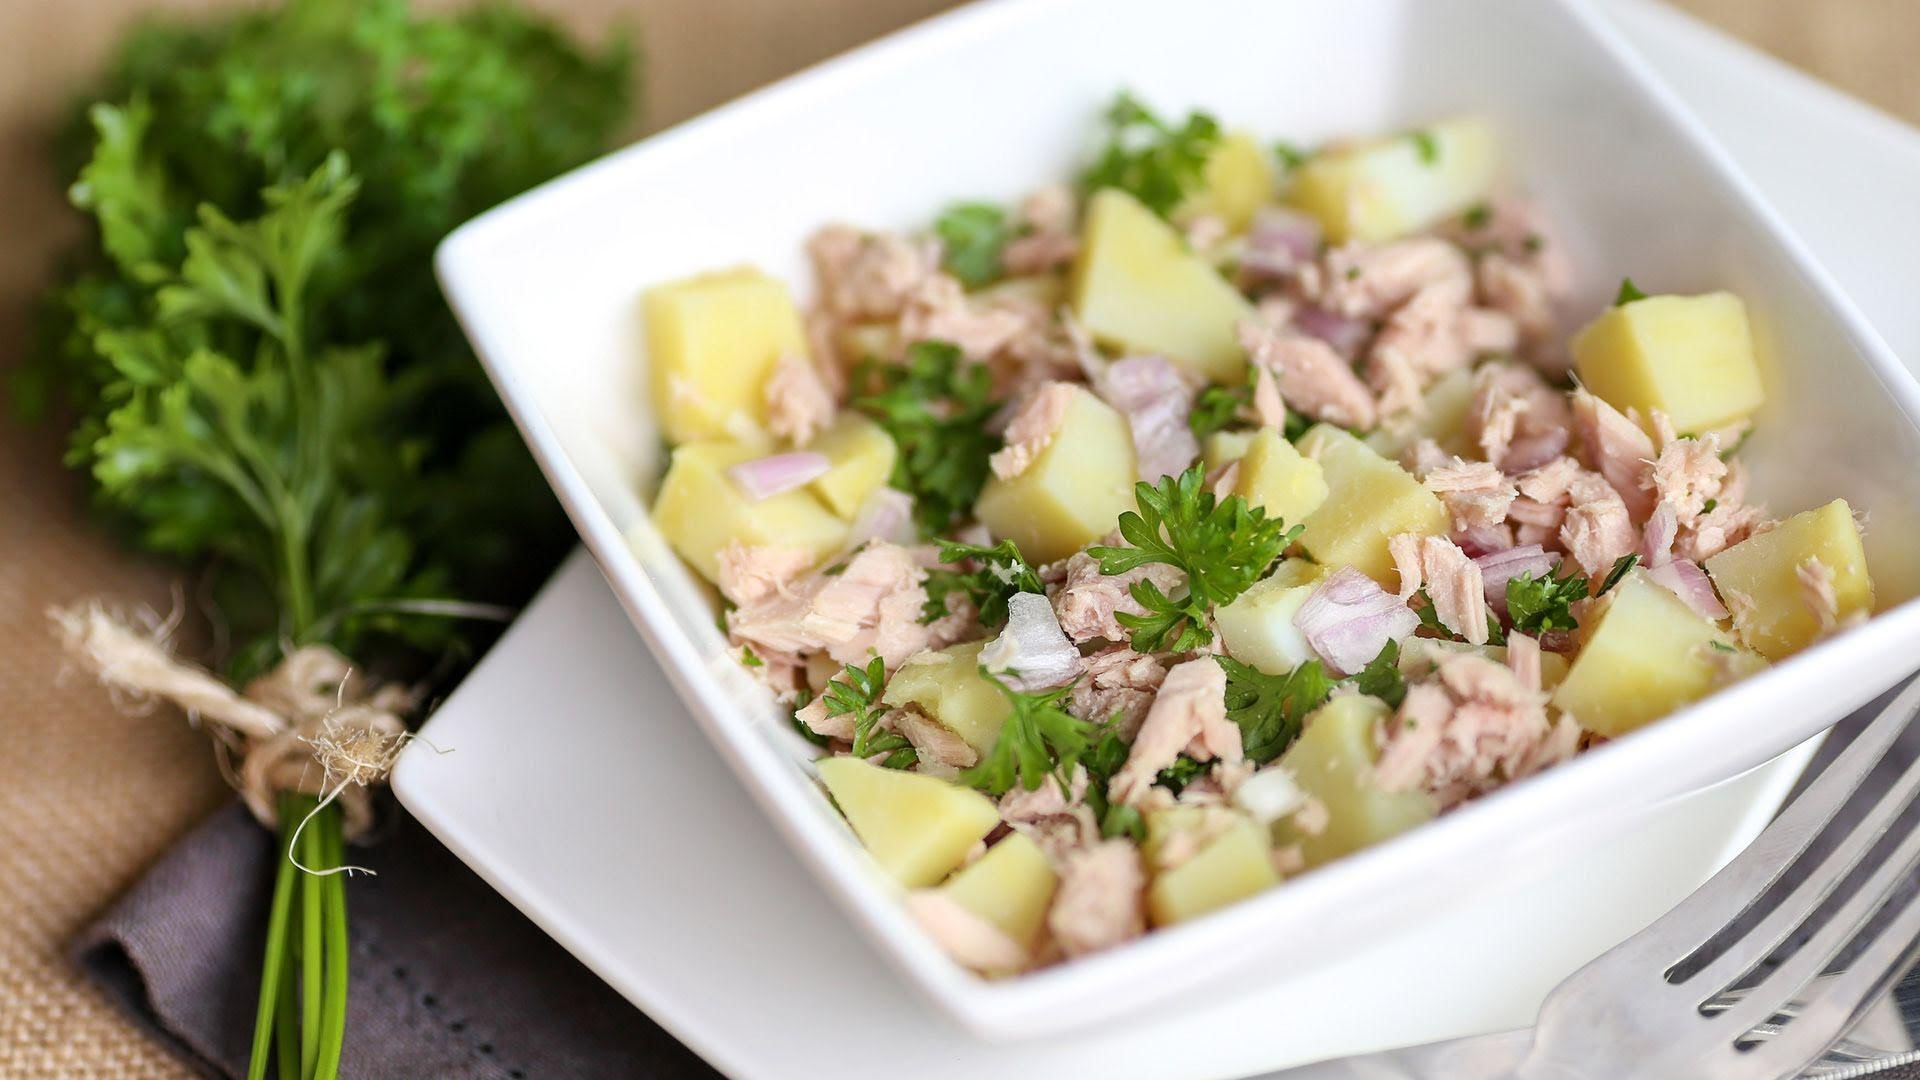 Salad of tuna, chickpeas and potatoes